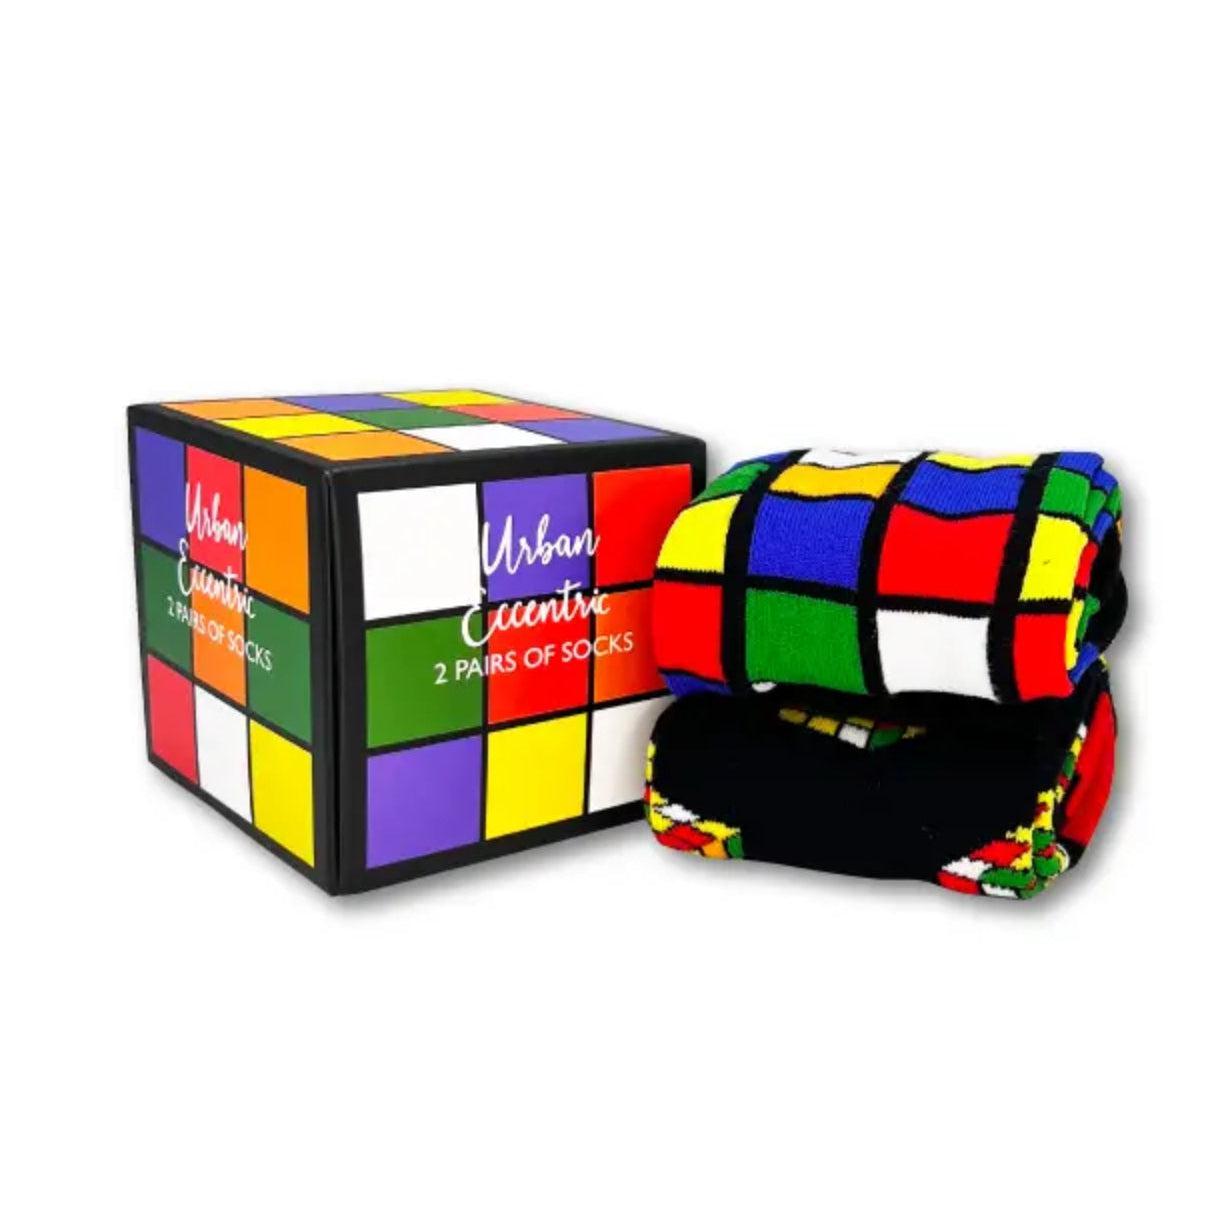 Rubik’s Cube Socks Gift Set-Breda's Gift Shop